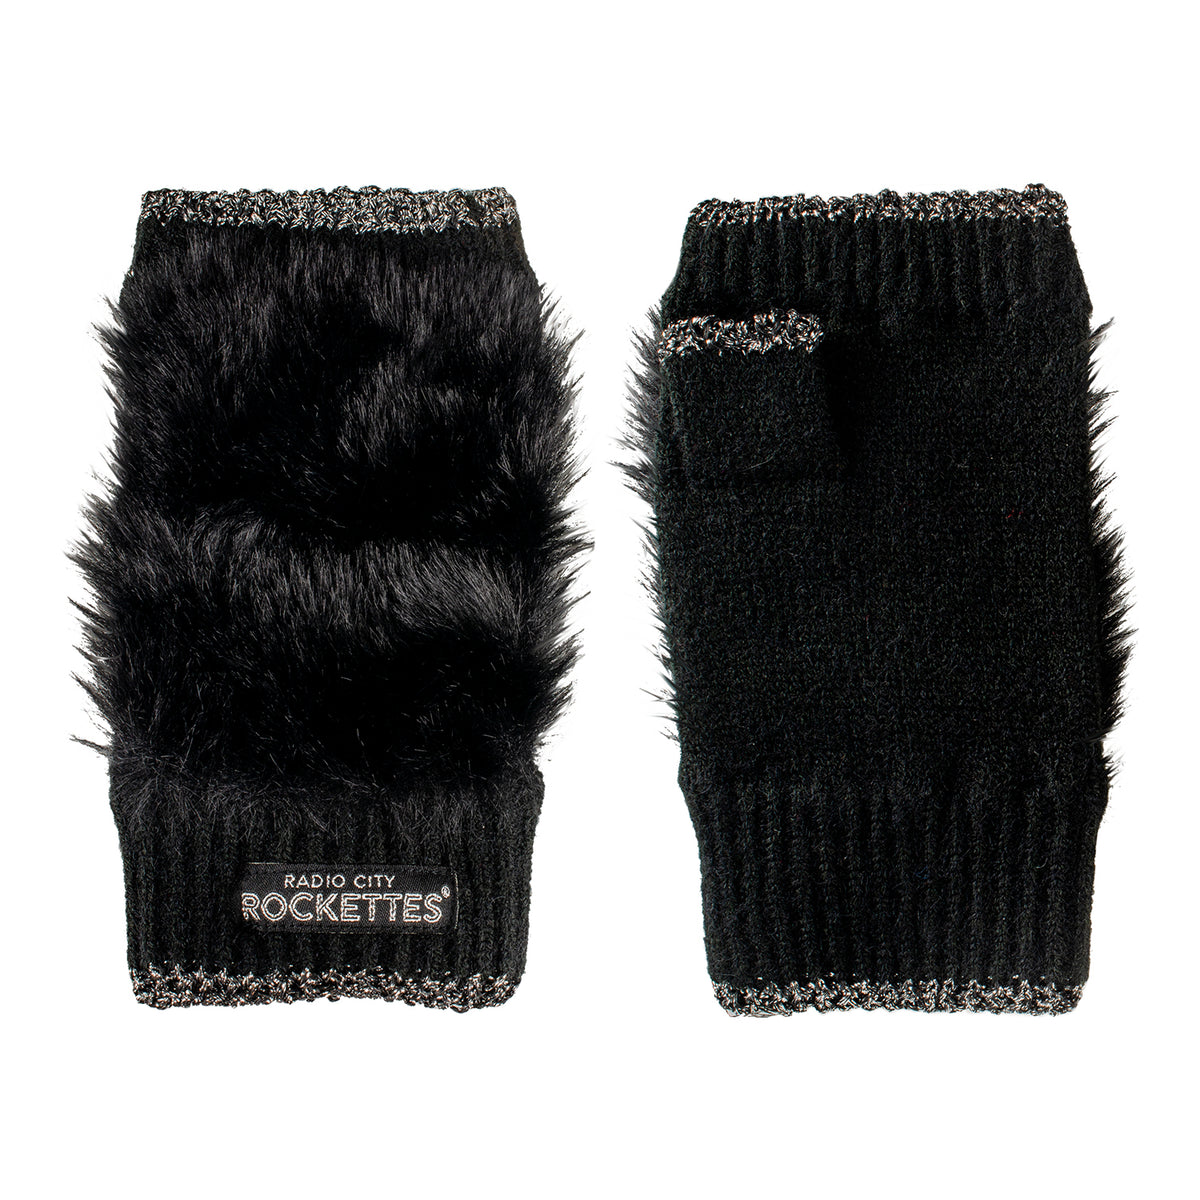 Radio City Rockettes Black Fingerless Glam Gloves